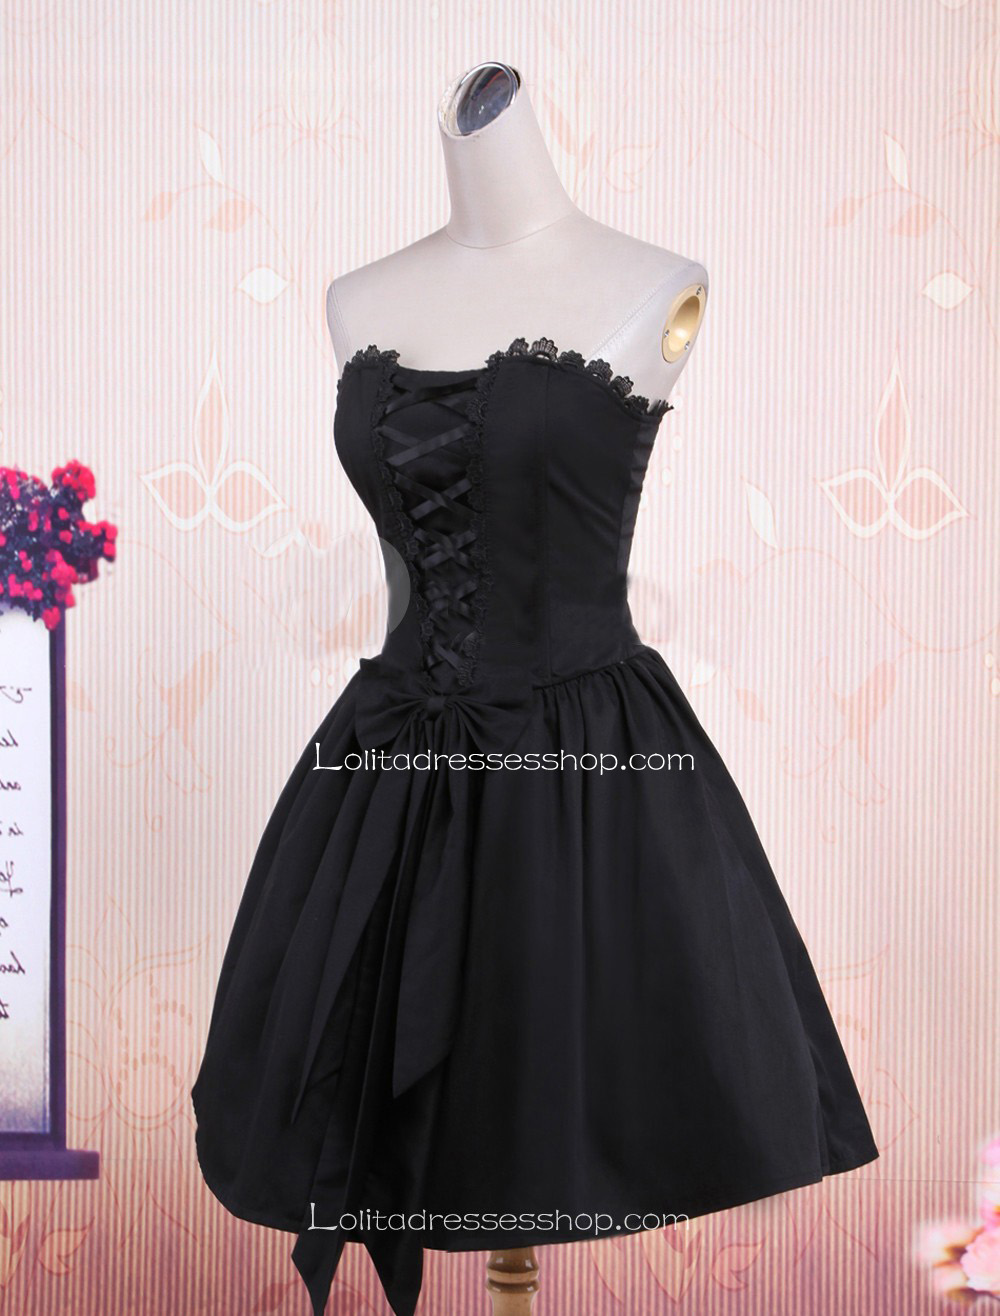 Black Tube Top Sleeveless Plain Bow Punk Lolita Dress